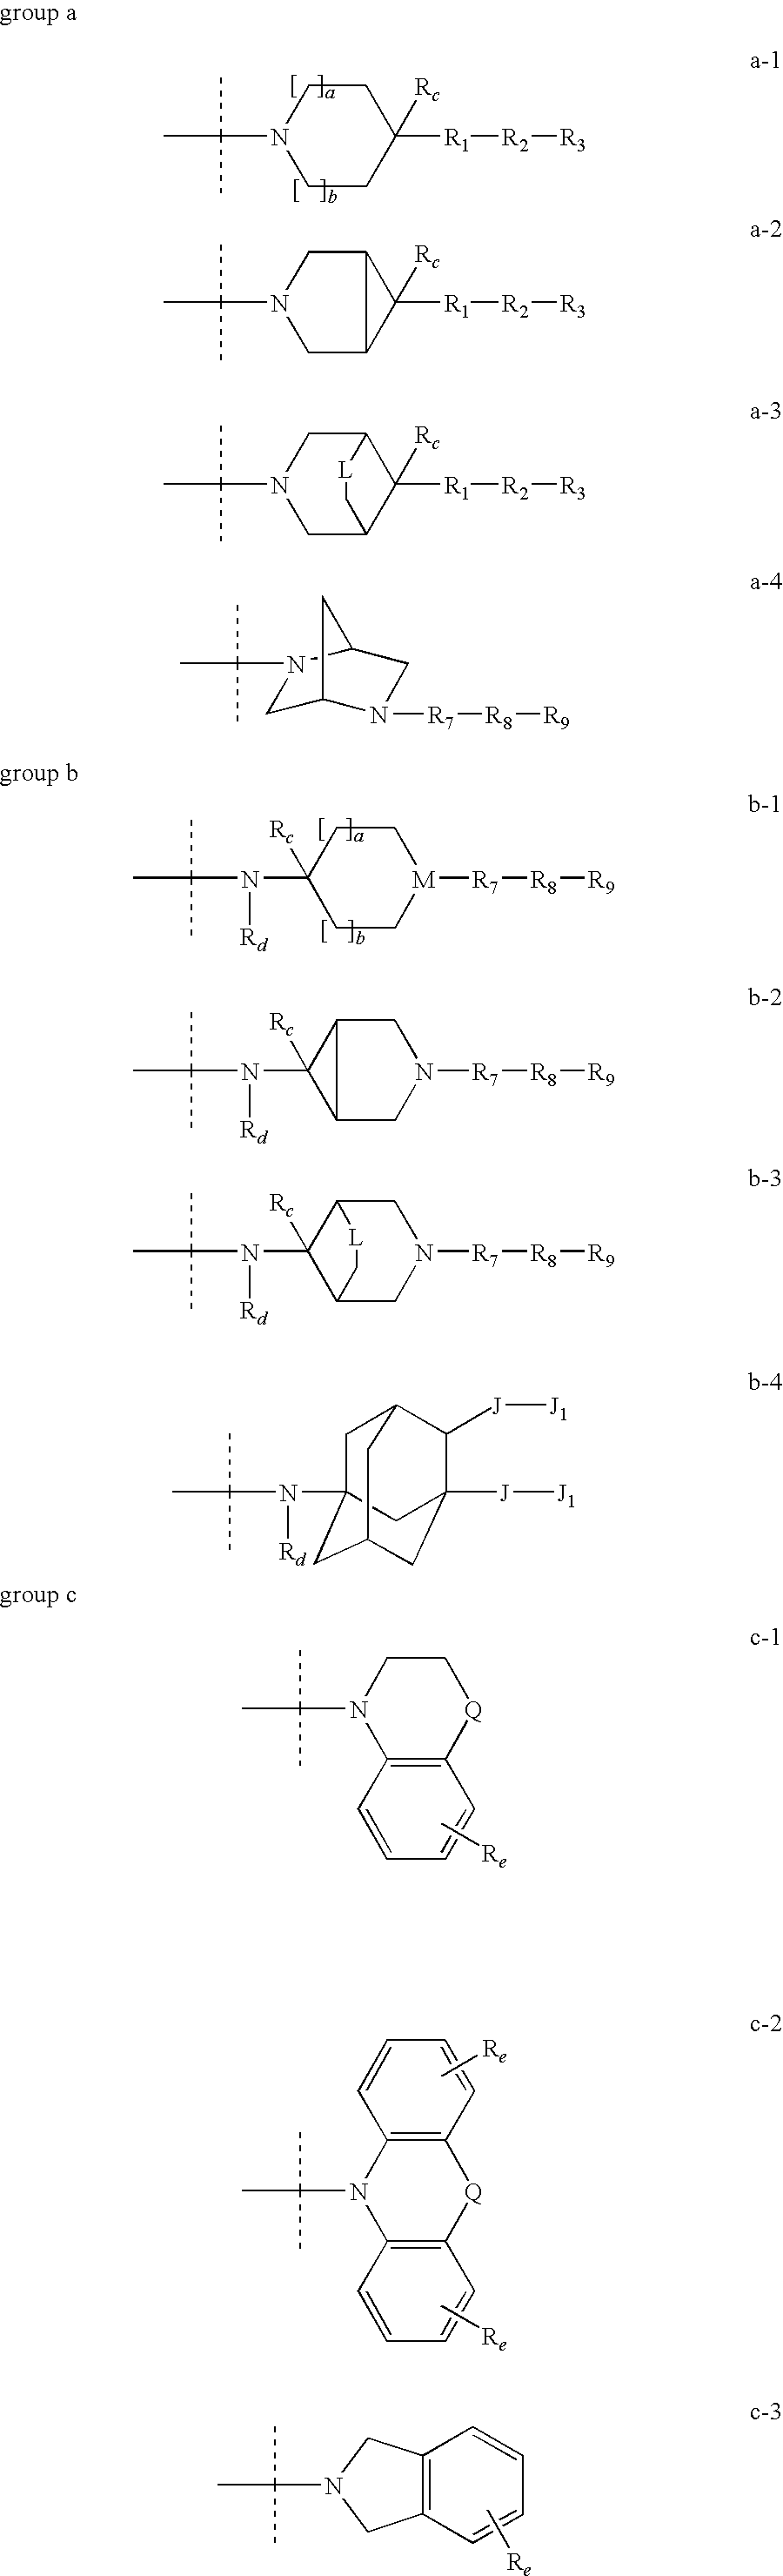 Derivatives of beta-amino acid as dipeptidyl peptidase-iv inhibitors